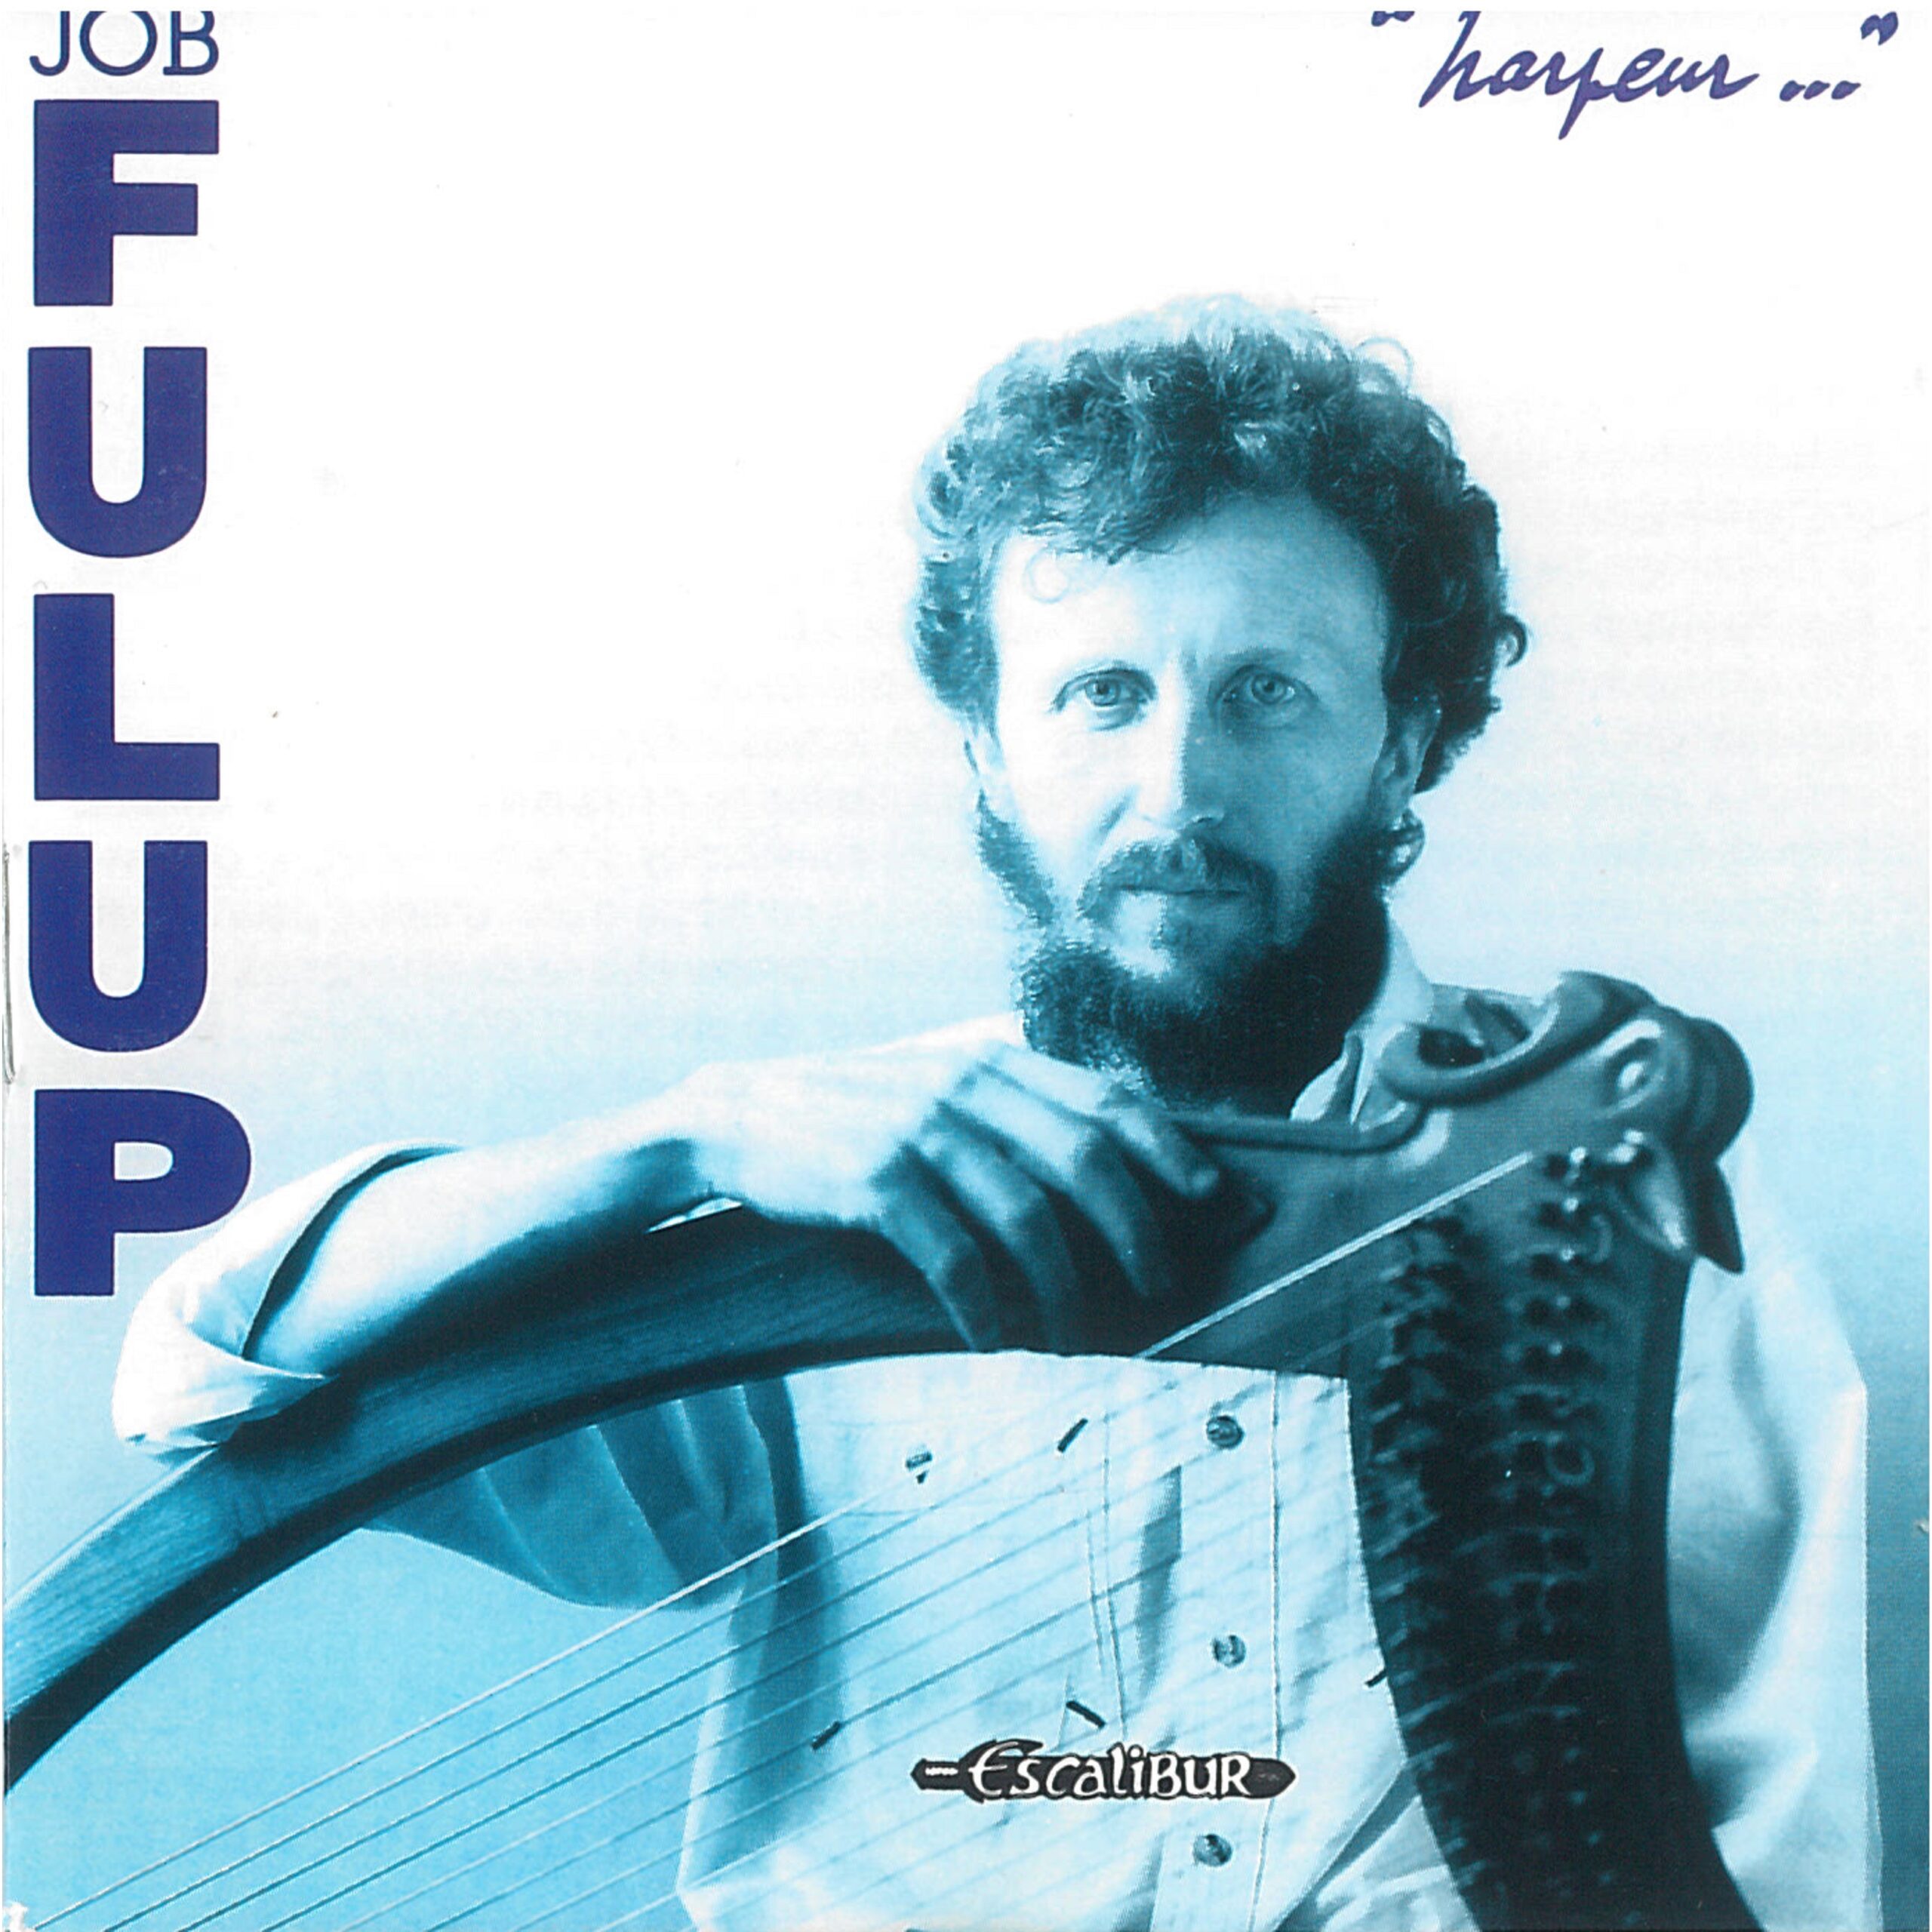 jobfulup harpeur